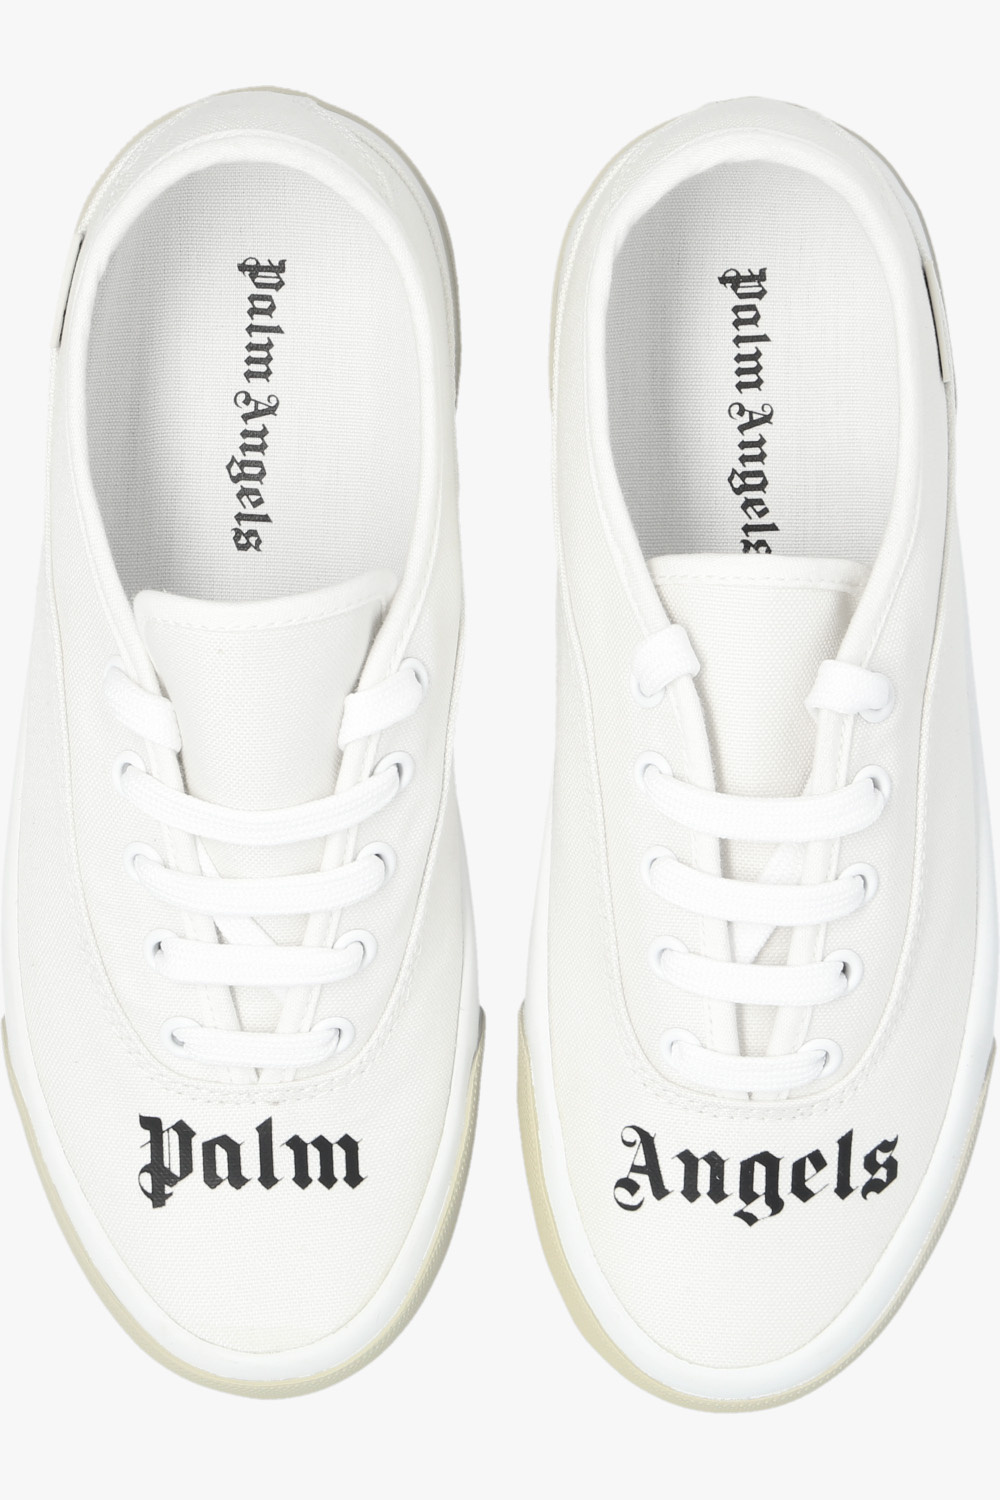 Palm Angels nike golf shoes for winter lunar bandon